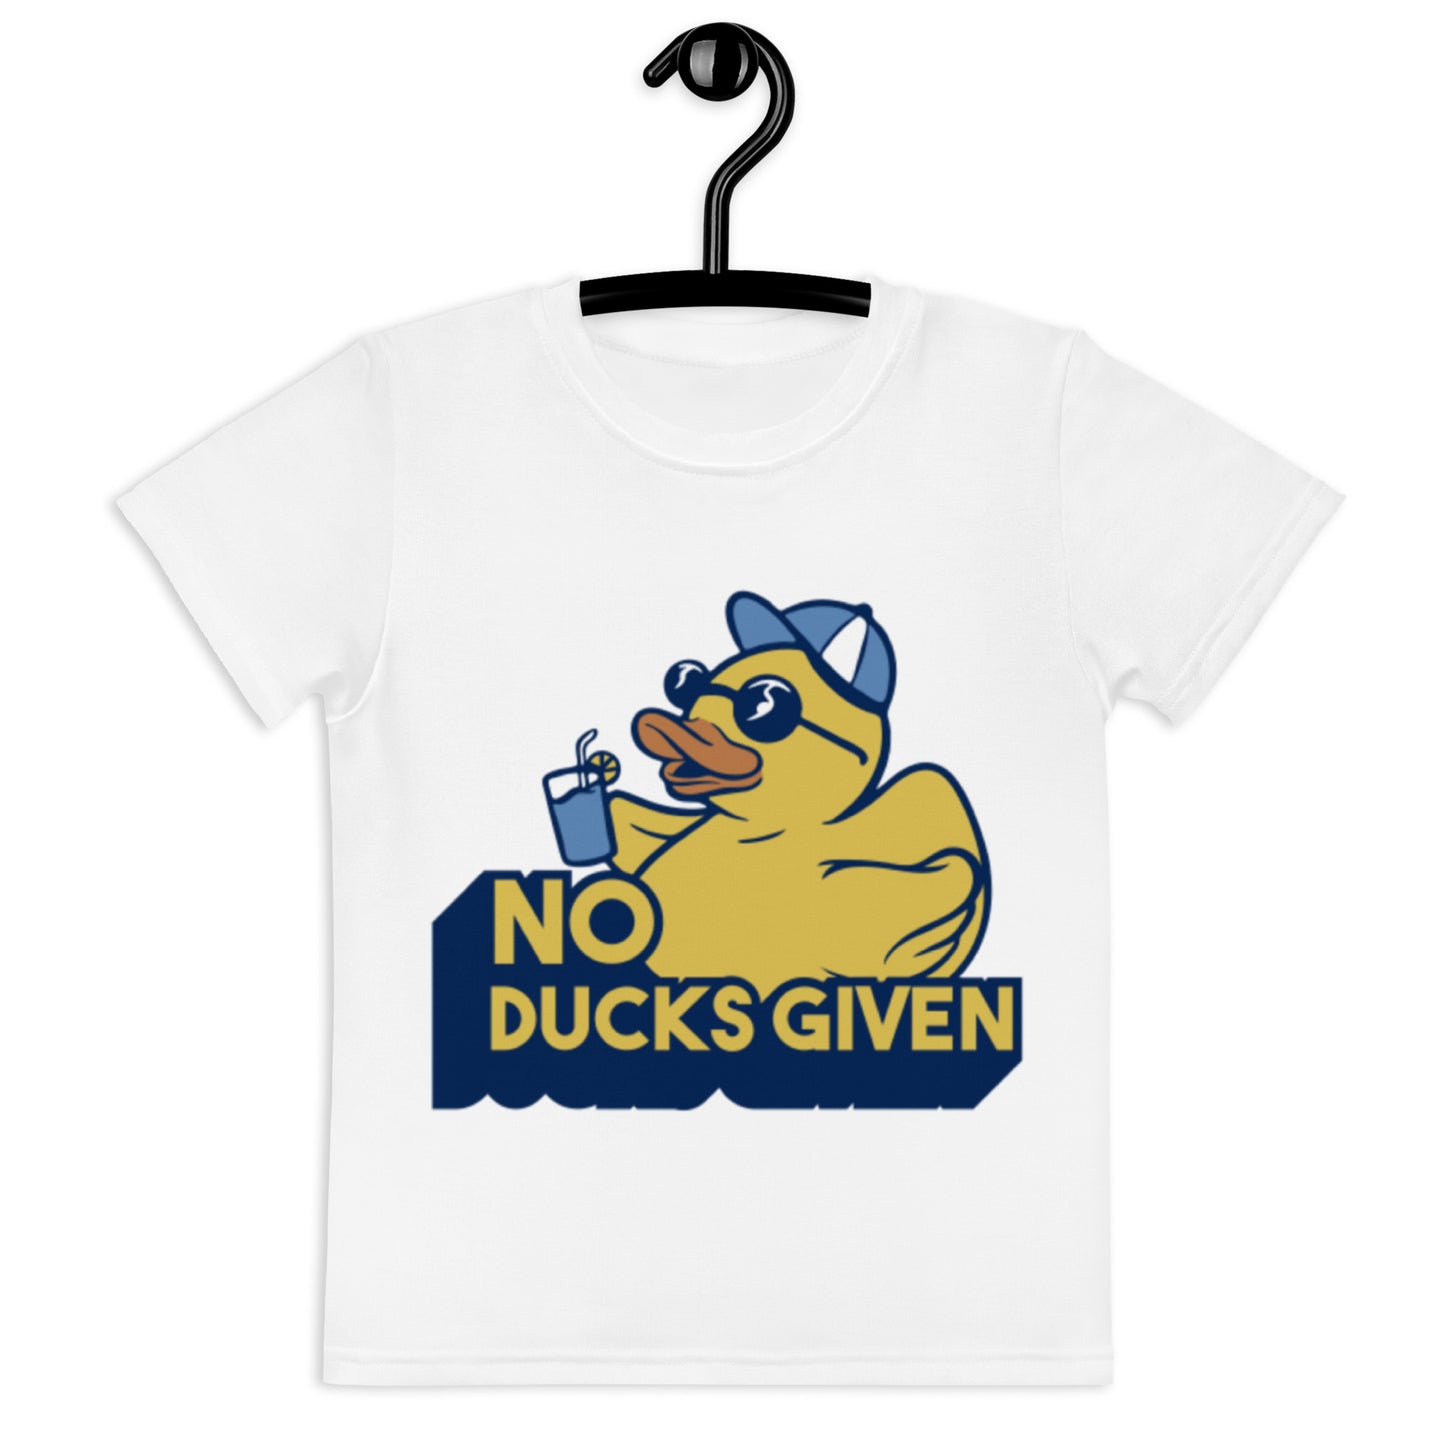 "No ducks" children's t-shirt